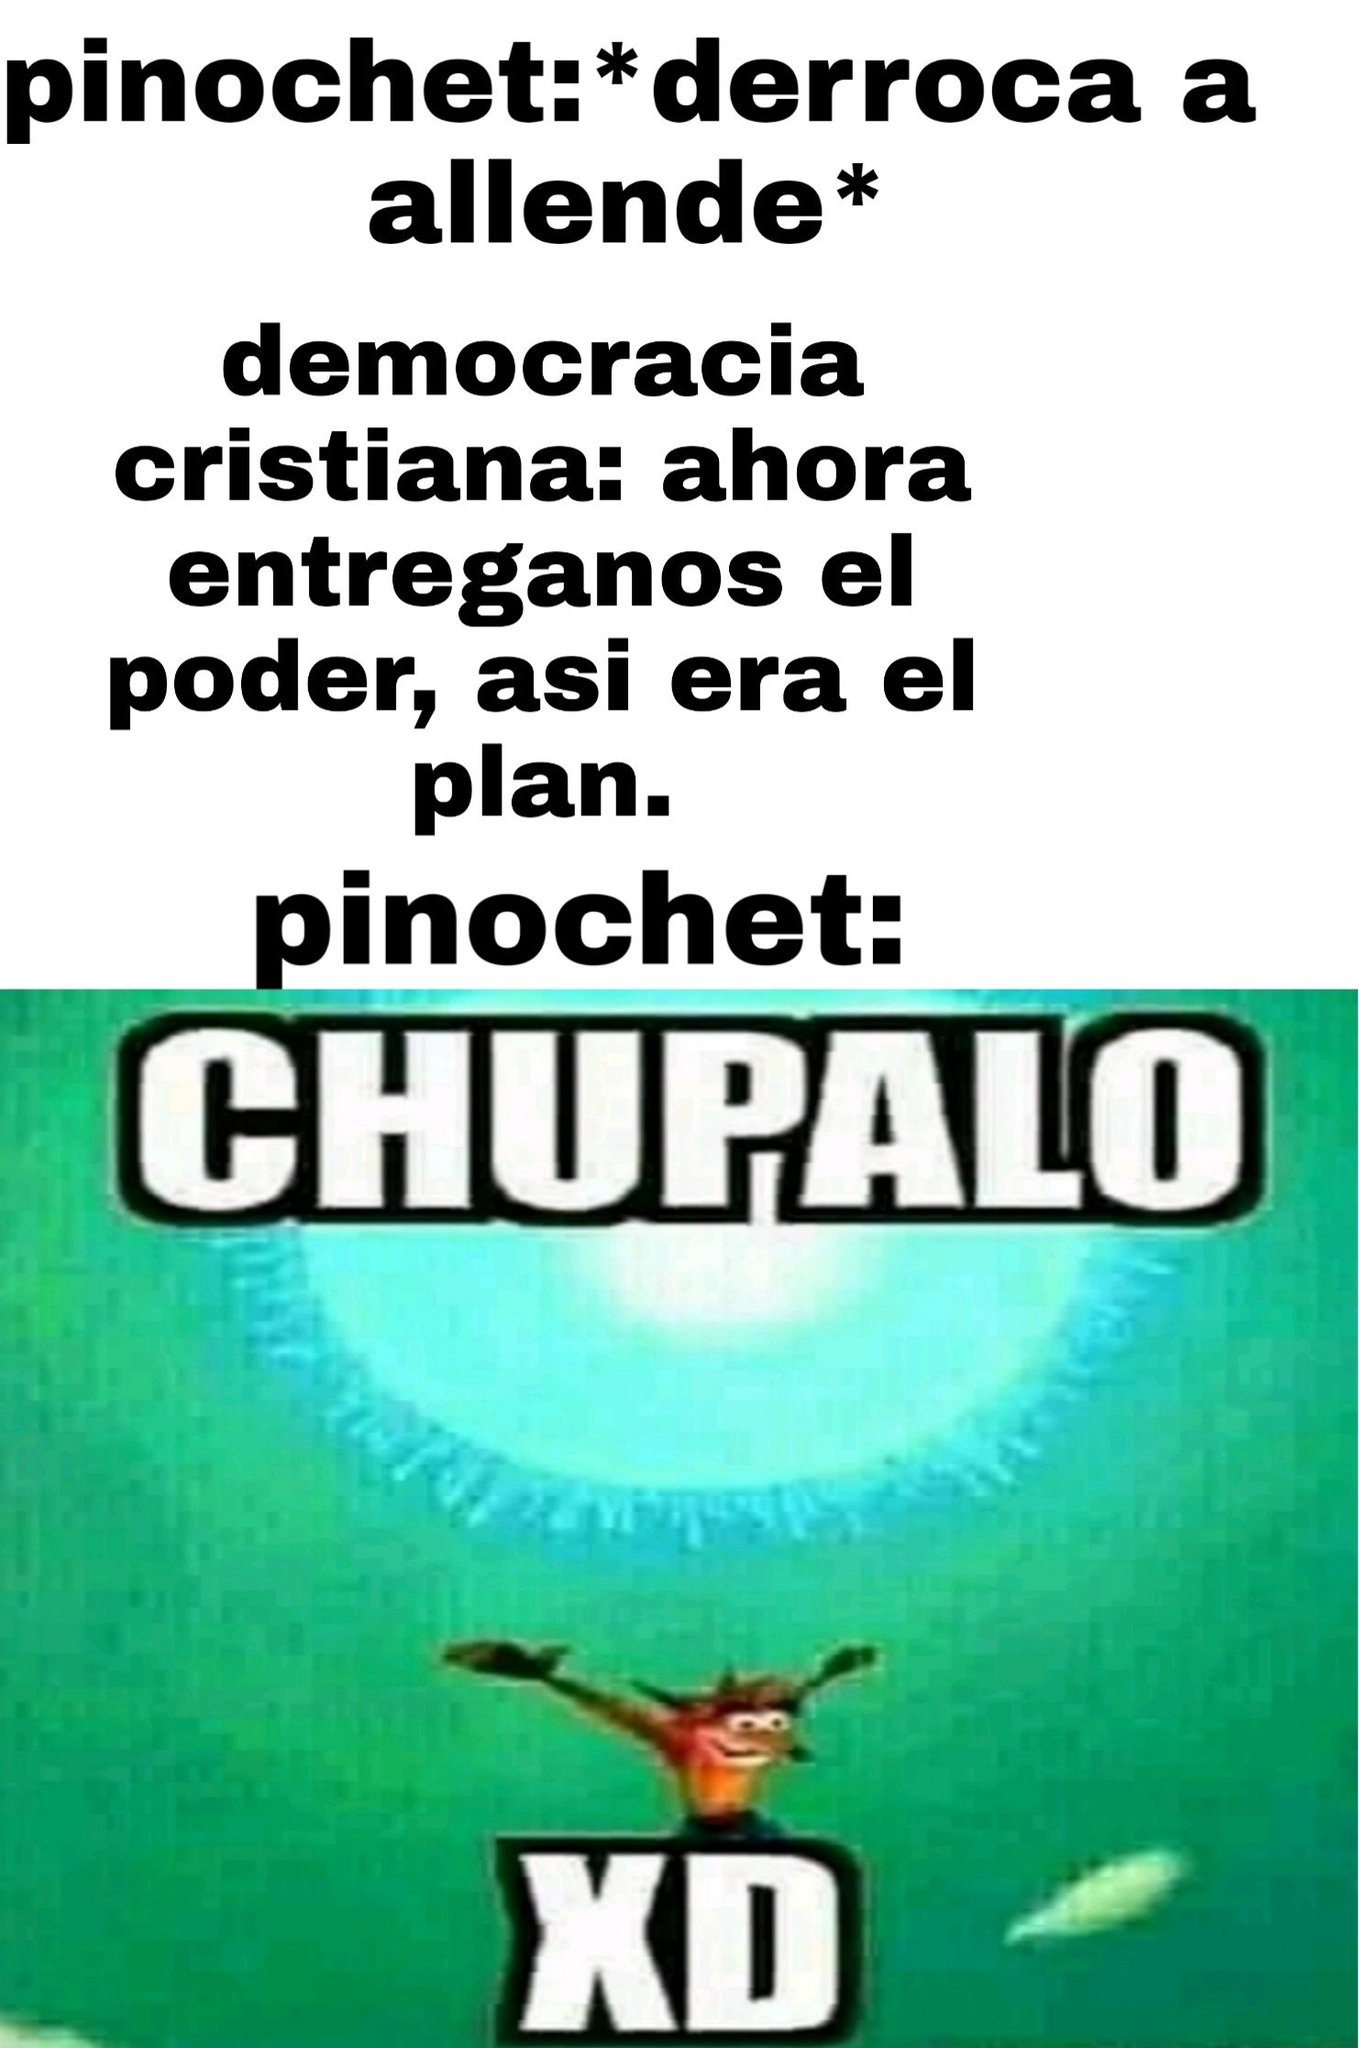 Chupalo XD - meme